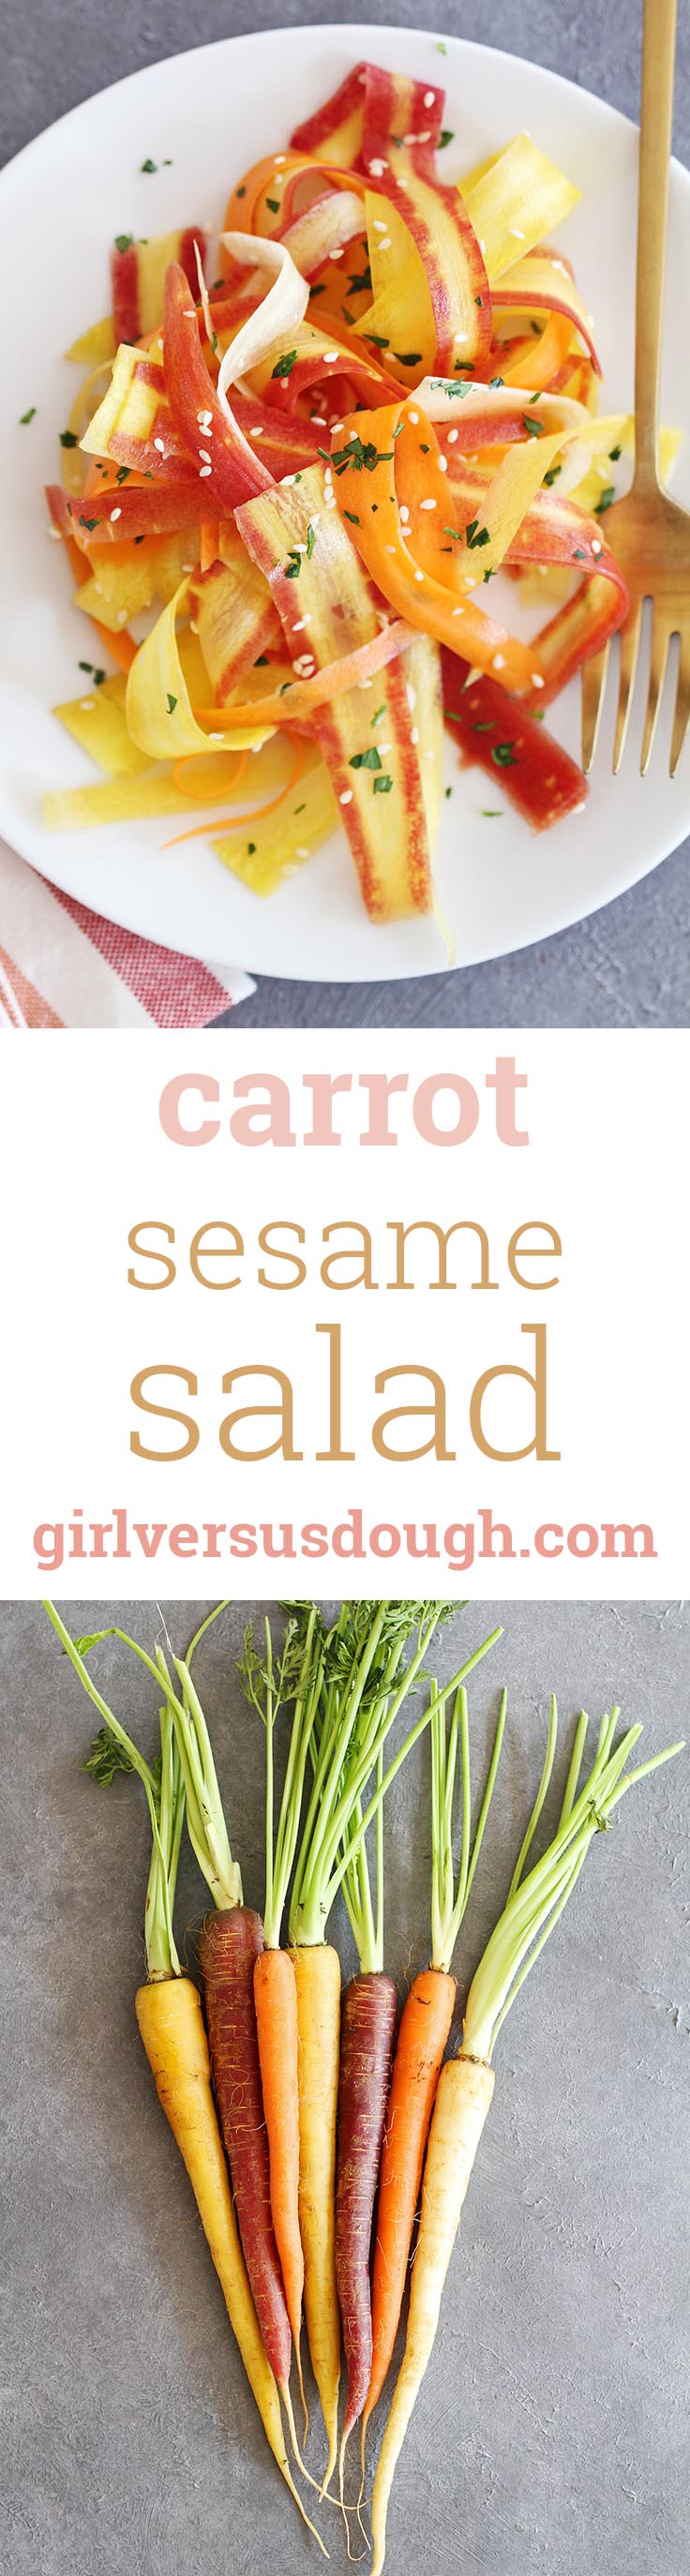 Carrot Sesame Salad -- Sweet, salty, crunchy and fresh. Easy to make, gluten free, vegan and delicious! www.girlversusdough.com @girlversusdough